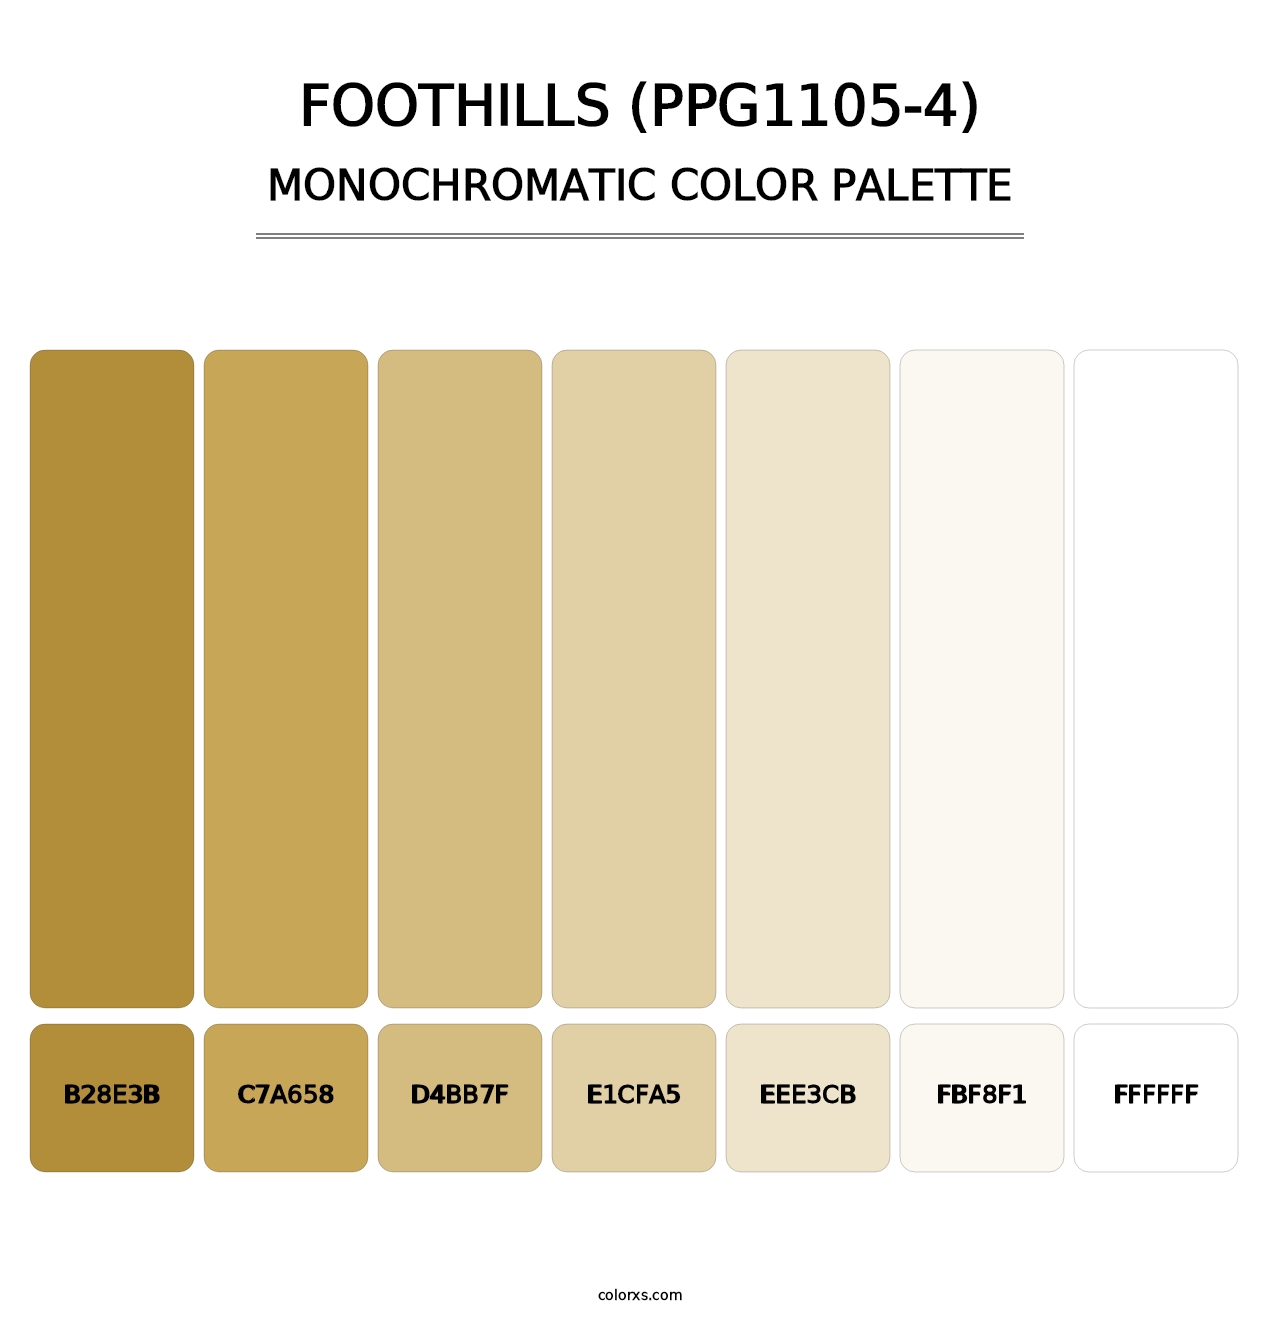 Foothills (PPG1105-4) - Monochromatic Color Palette